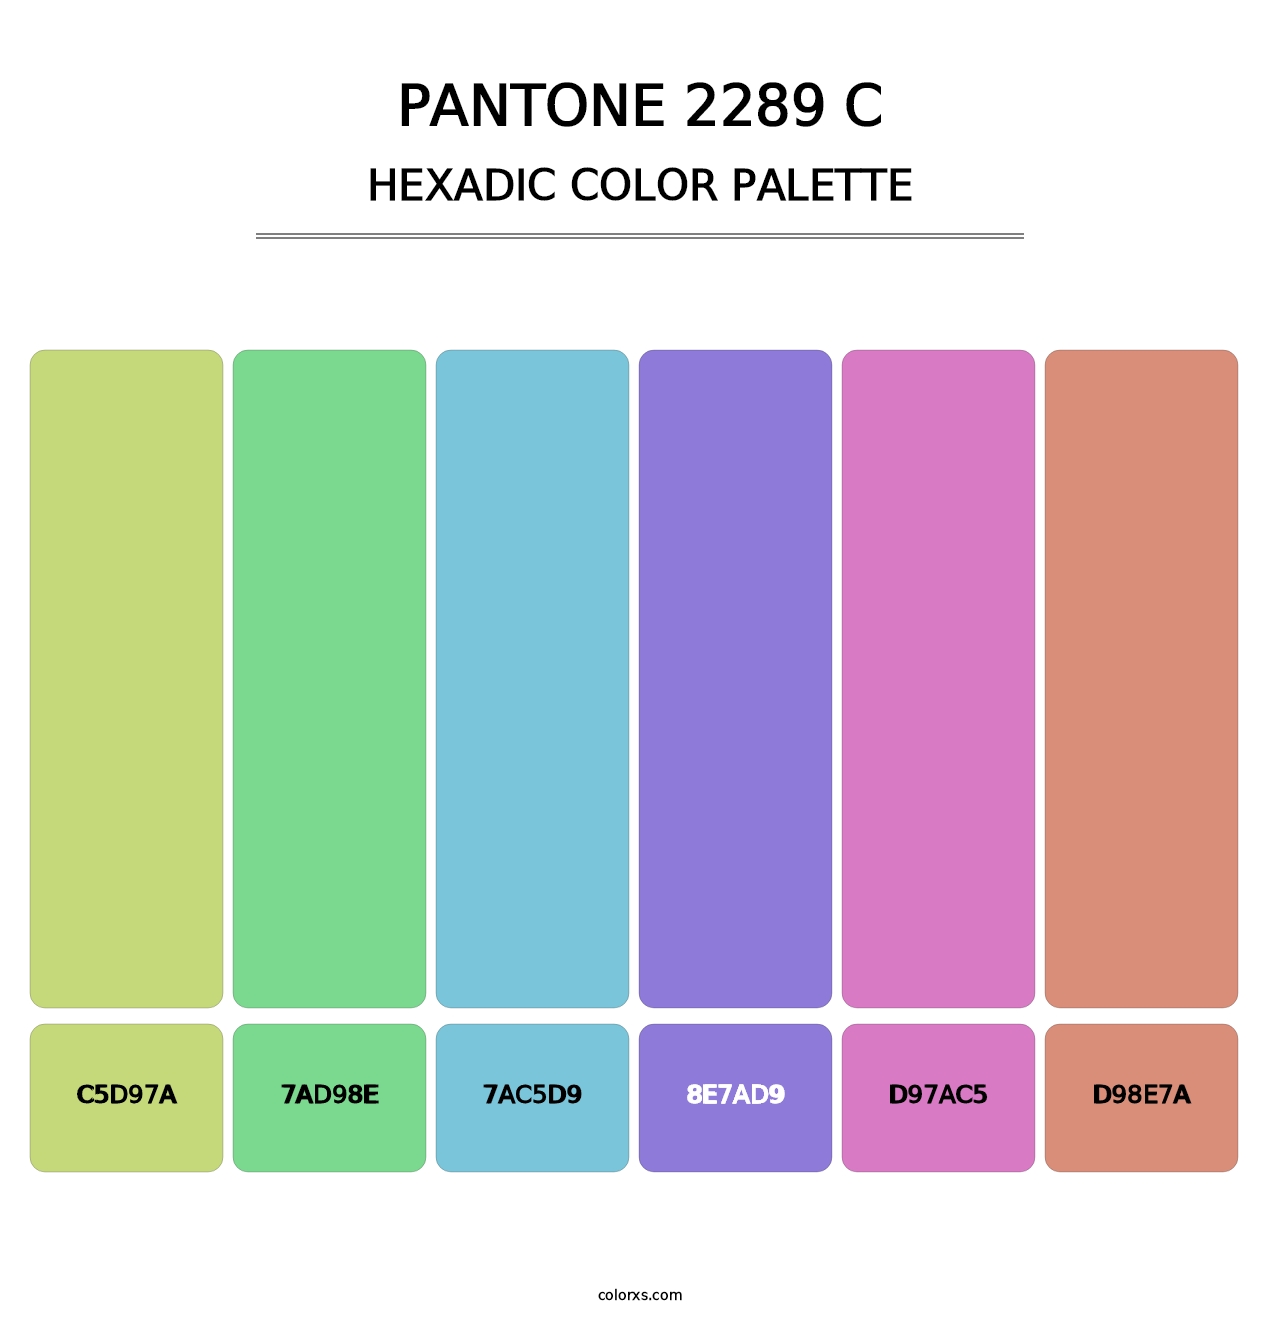 PANTONE 2289 C - Hexadic Color Palette